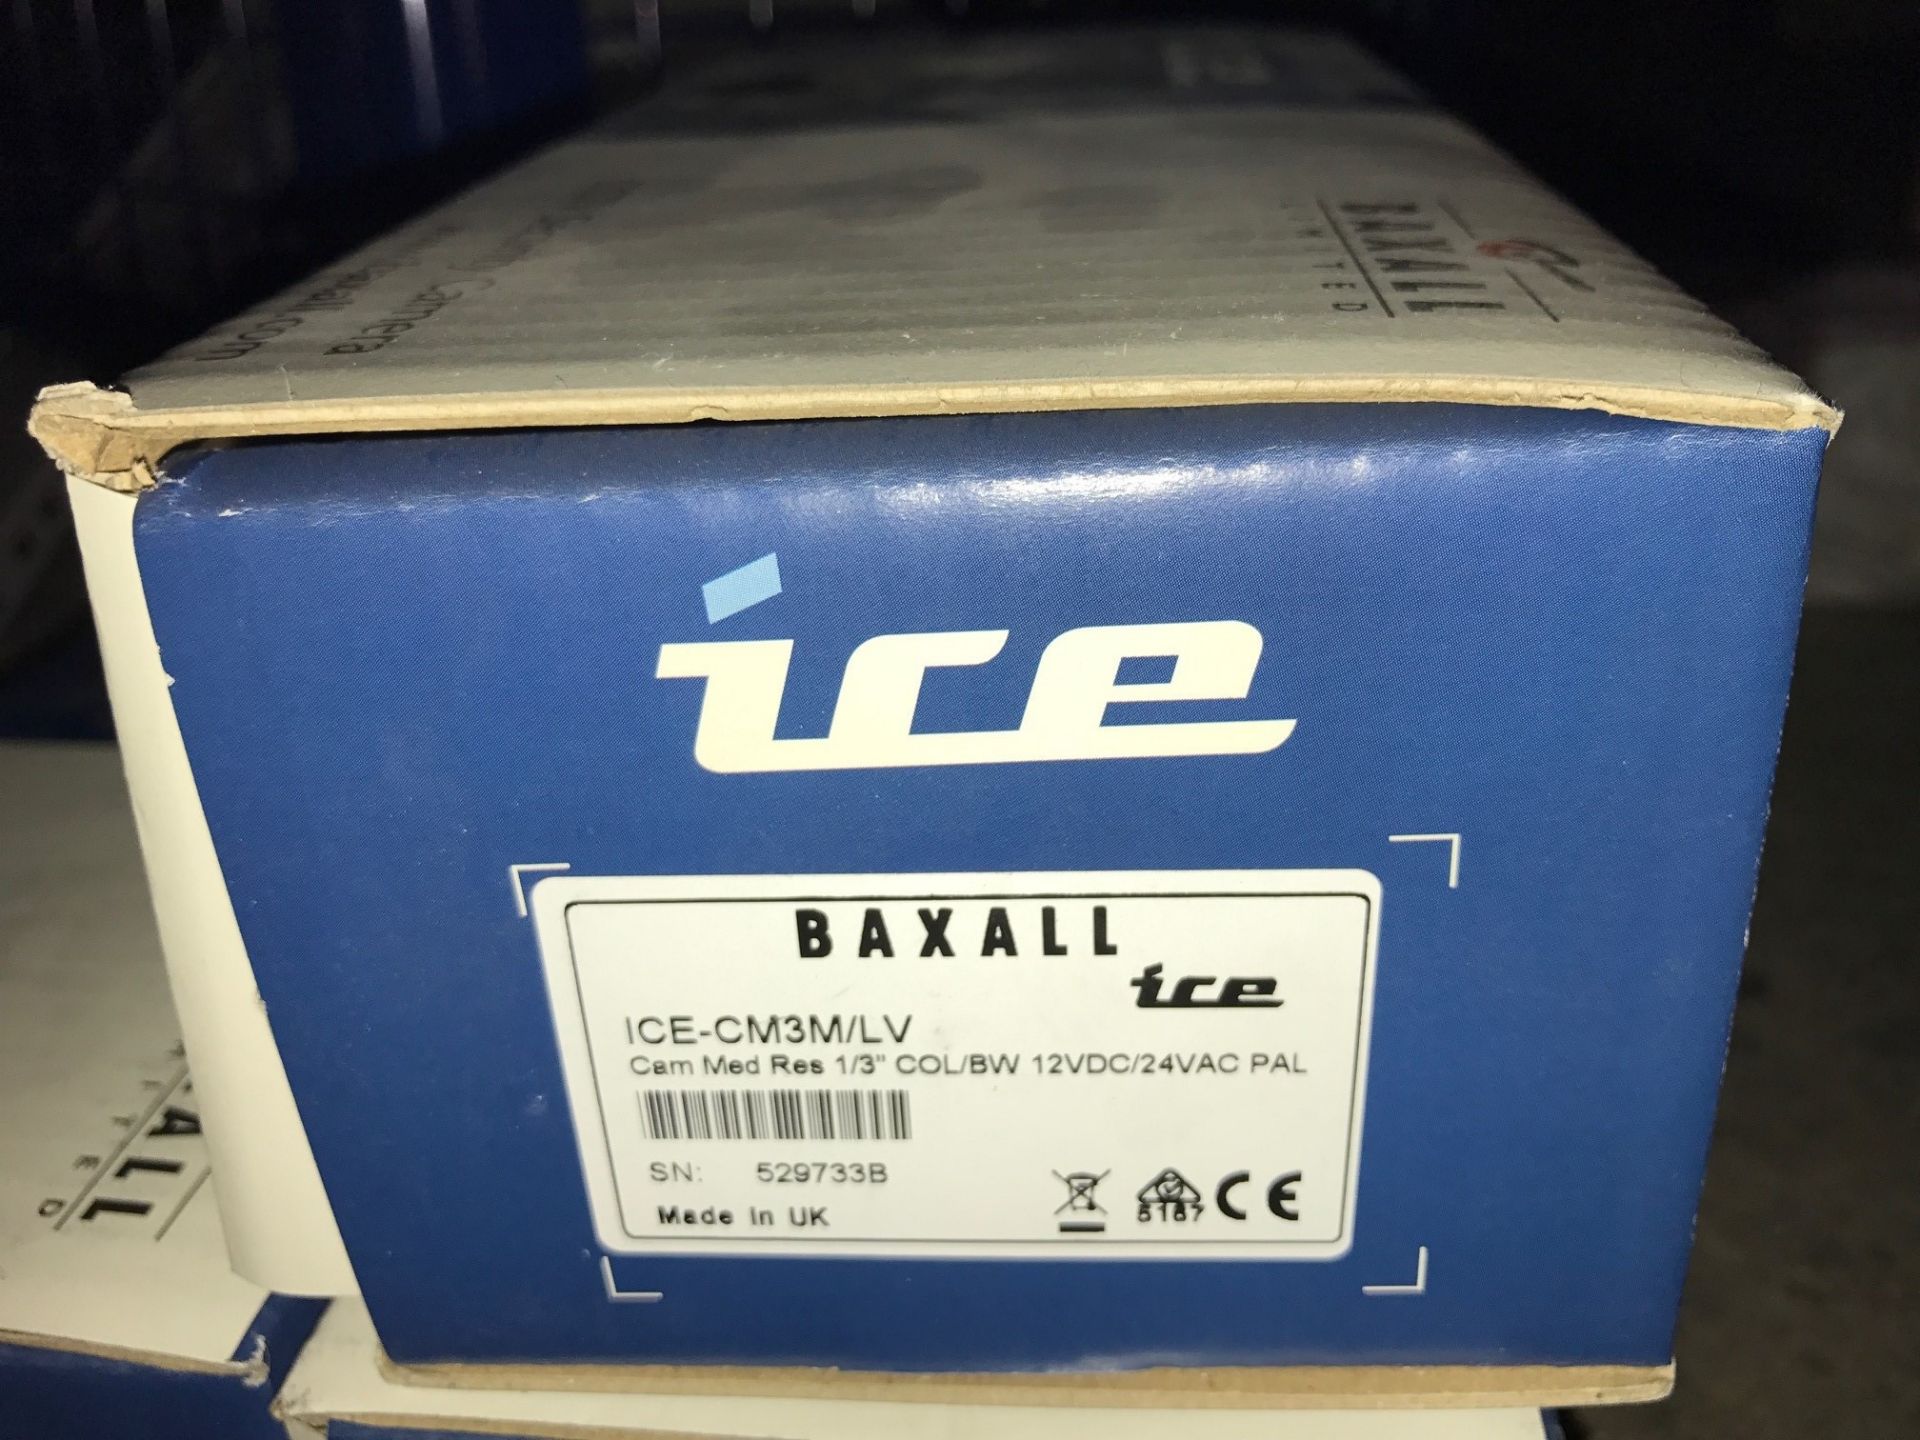 4 x Baxall ICE-CM3M/LV/N Medium Resolution Cameras - Cam Med Res COL/BW 12VDC/24VAC PAL (Brand New & - Image 4 of 4